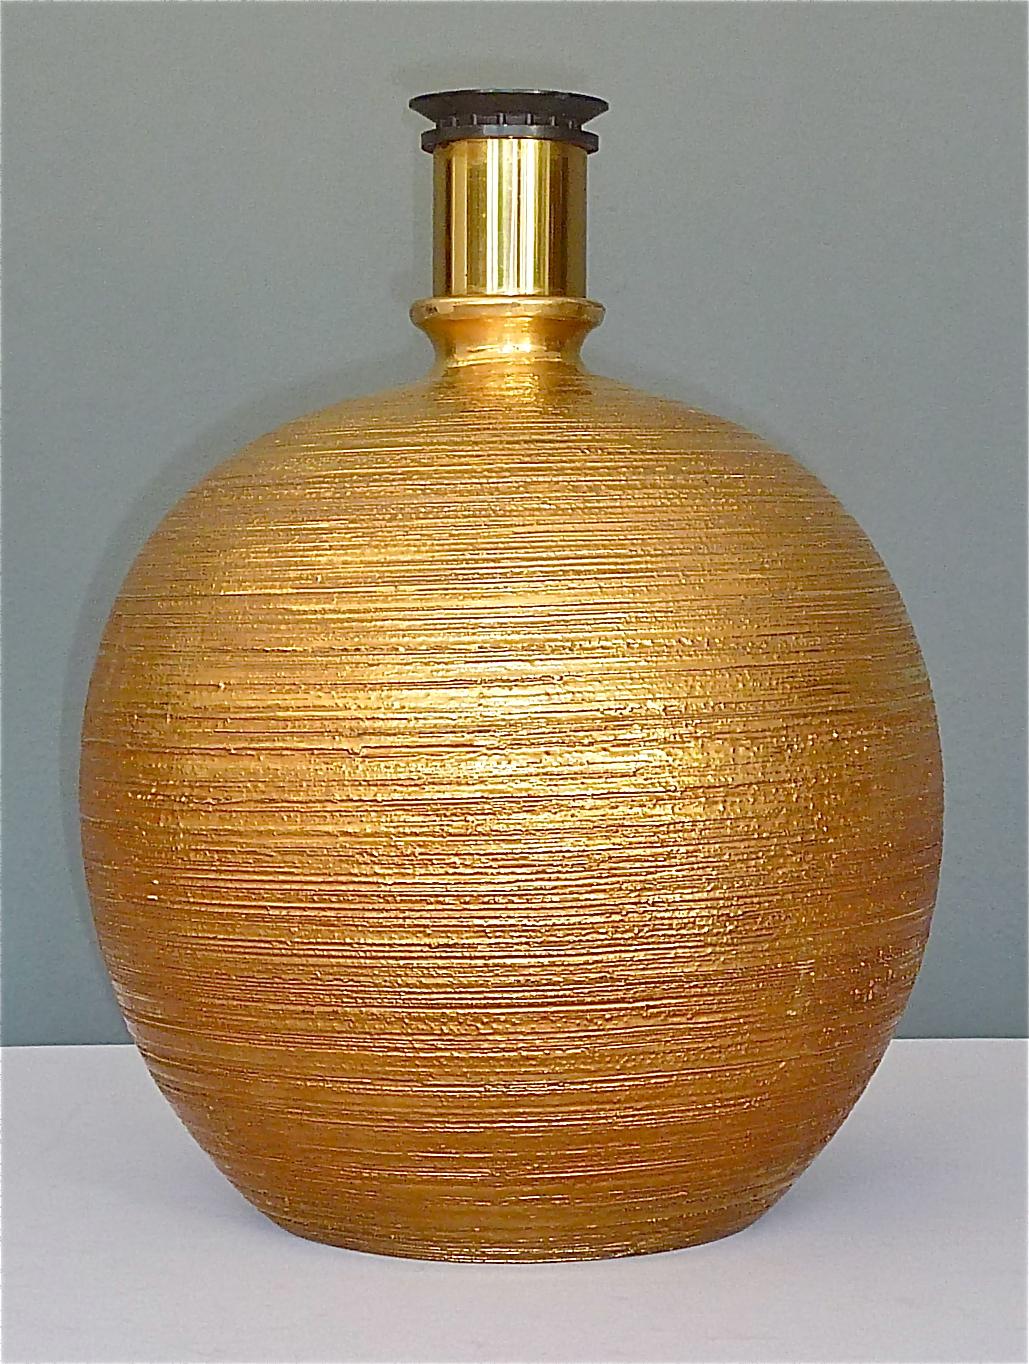 Large Rare Italian Gold Ceramic Bitossi Table Lamp for Bergboms 1950s Sweden  For Sale 2